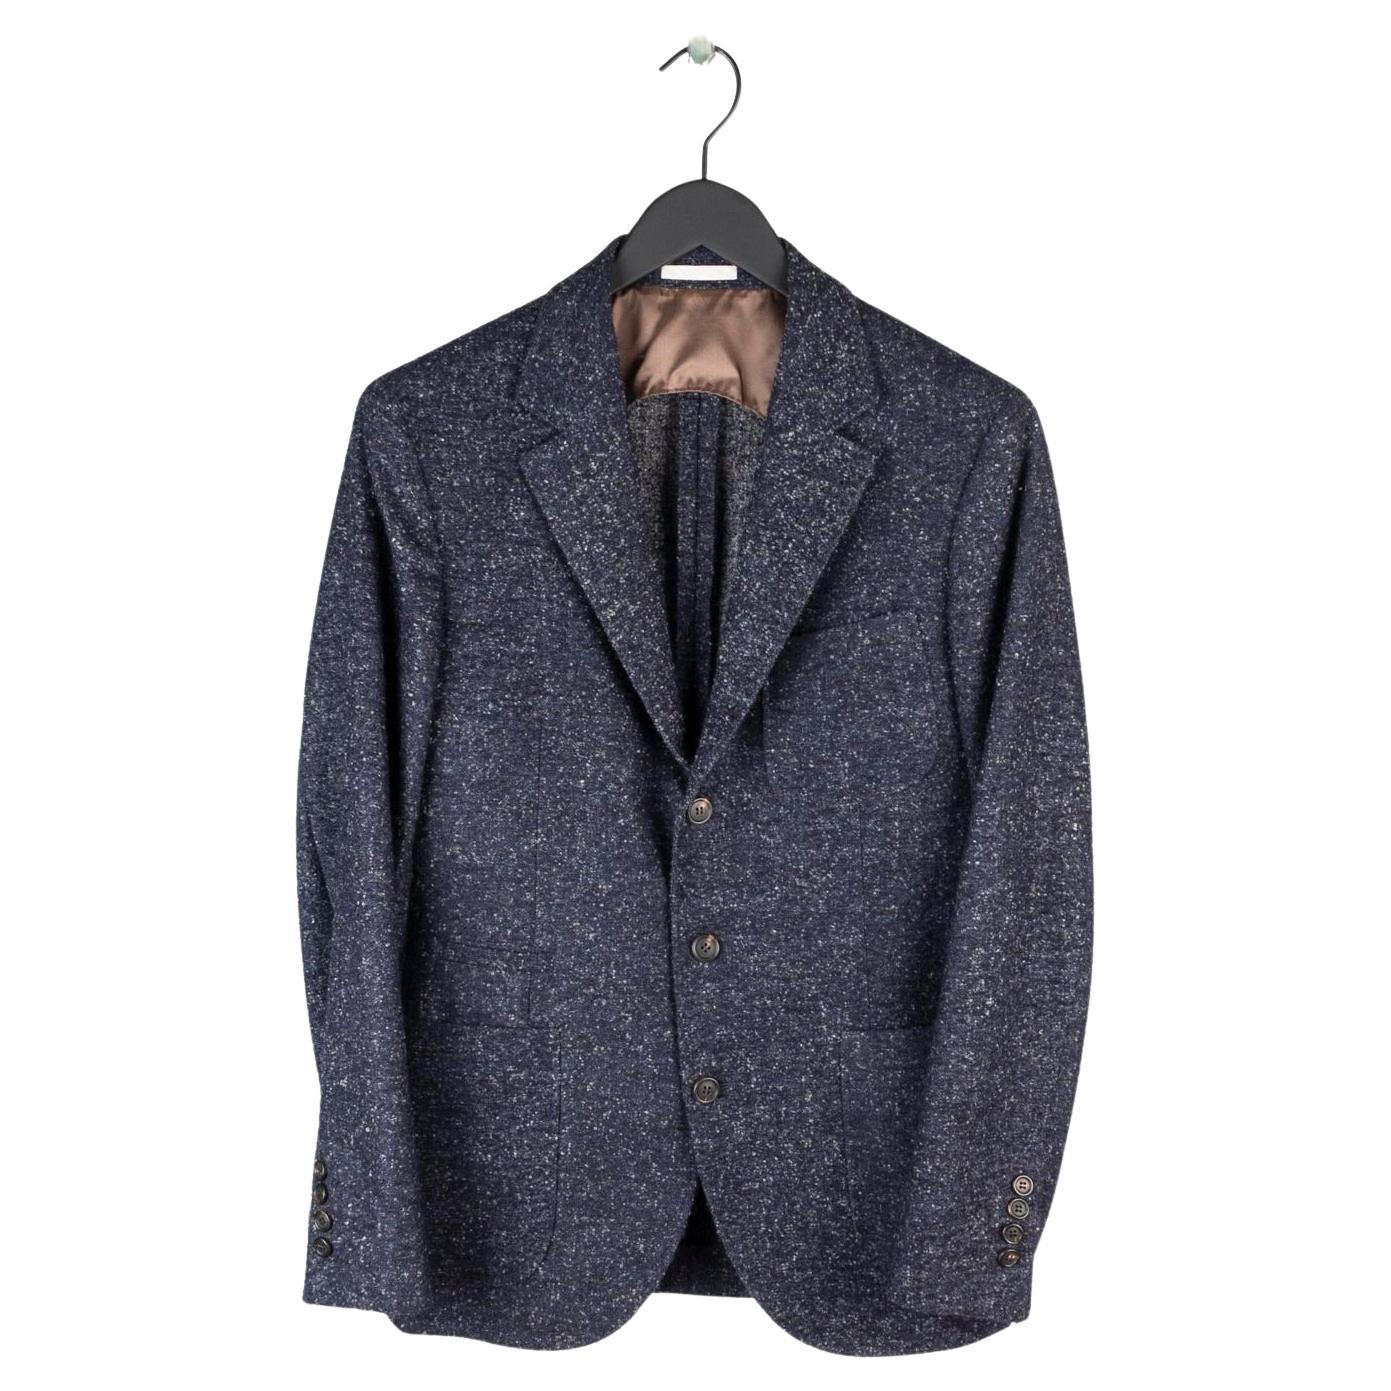 Brunello Cucinelli blazer bleu gris taille 48 (M), S644 en vente